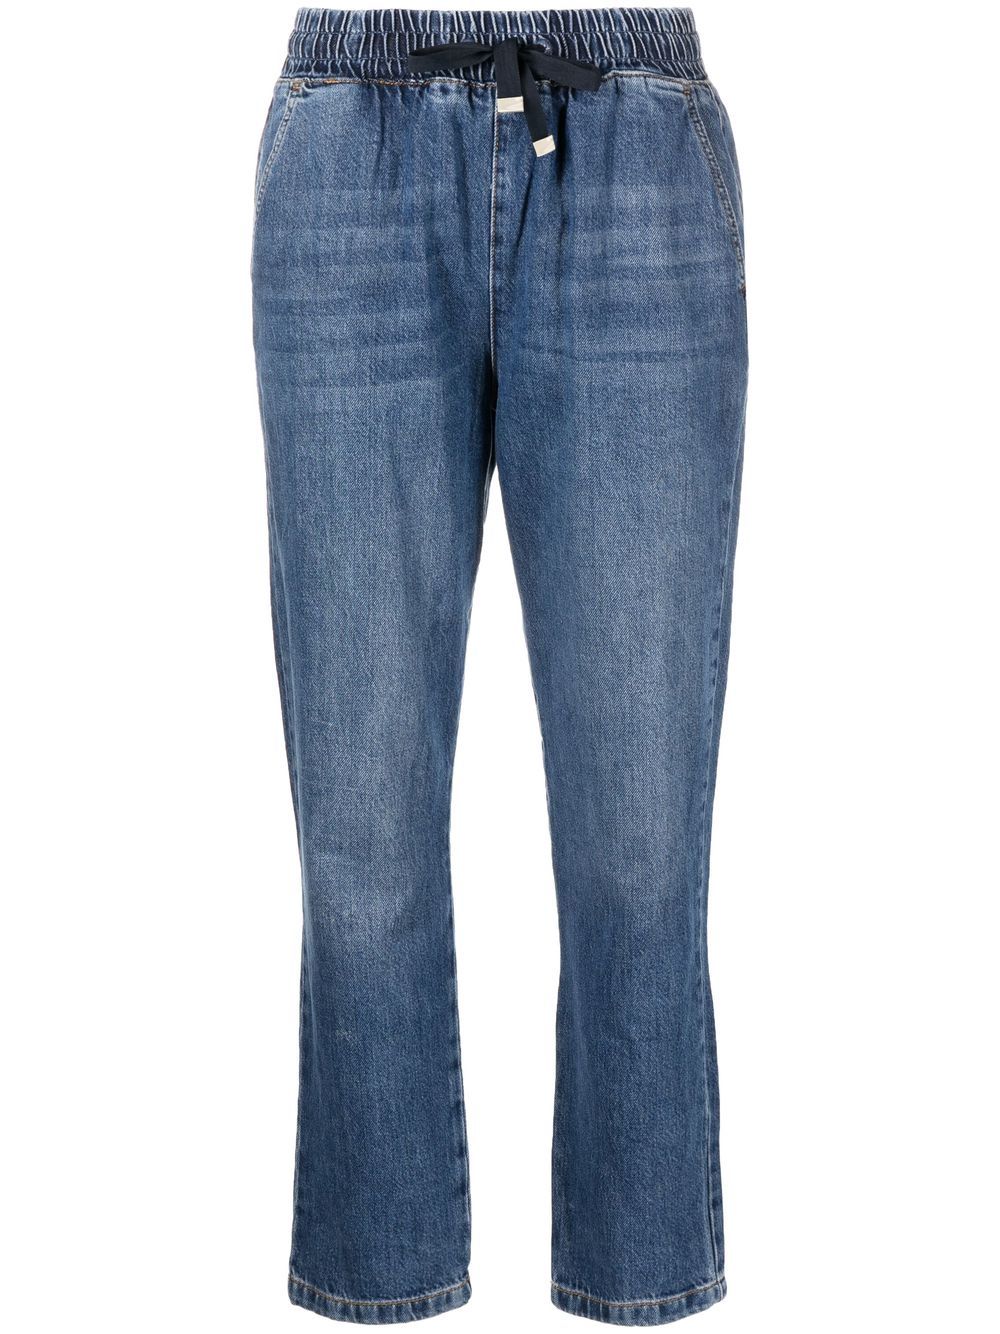 LIU JO drawstring cropped jeans - Blue